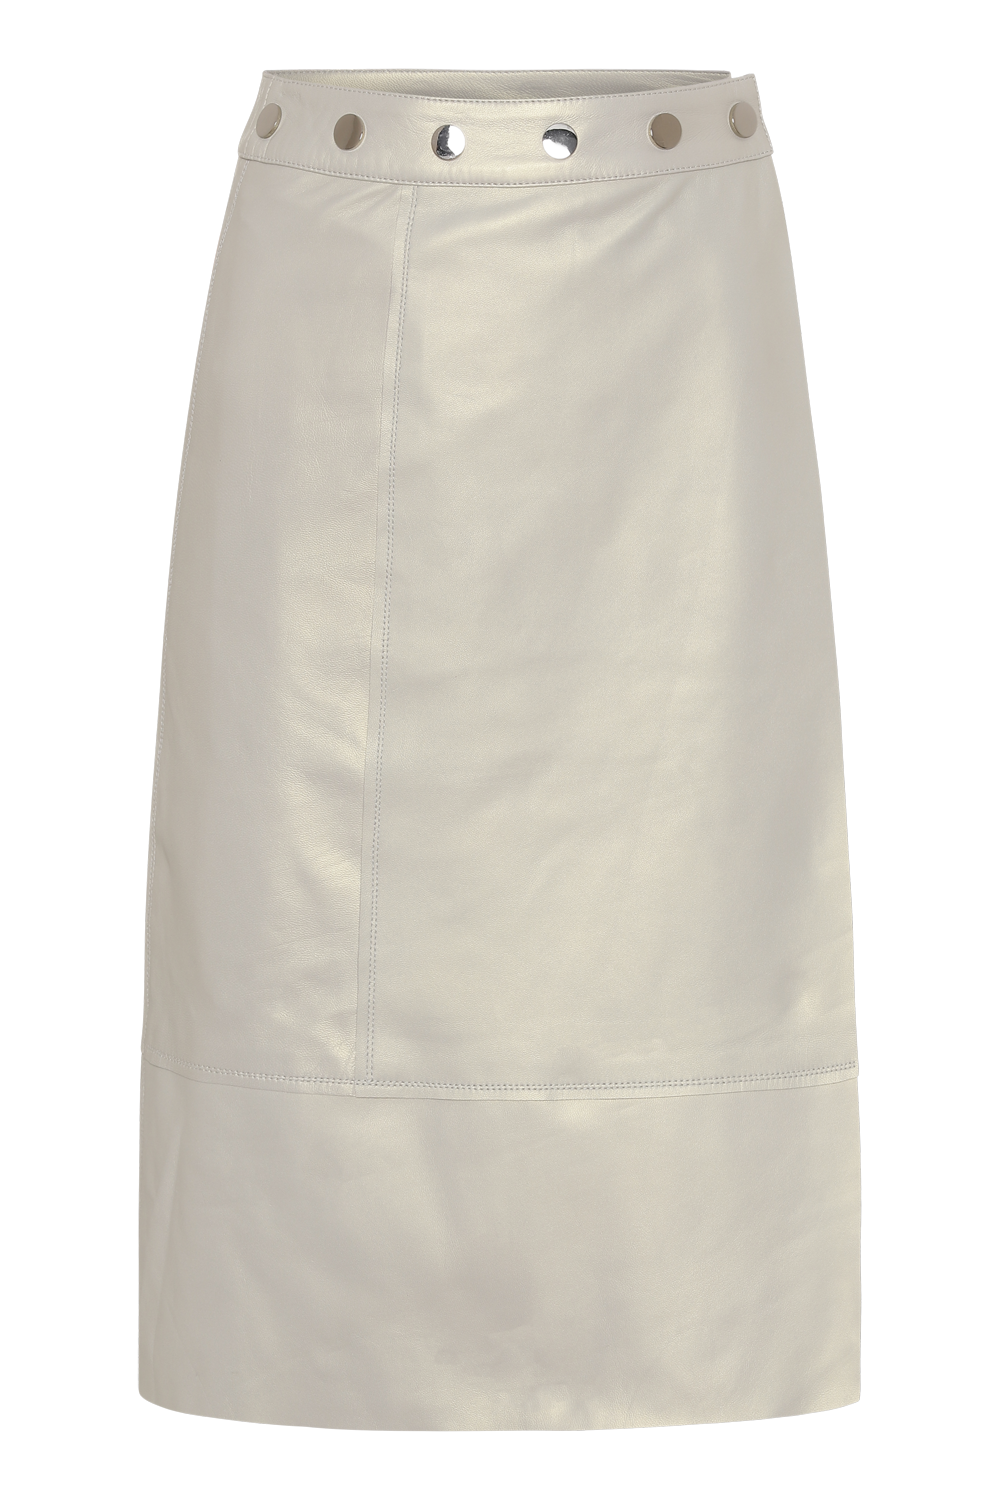 Yuma Leather Skirt Cream White